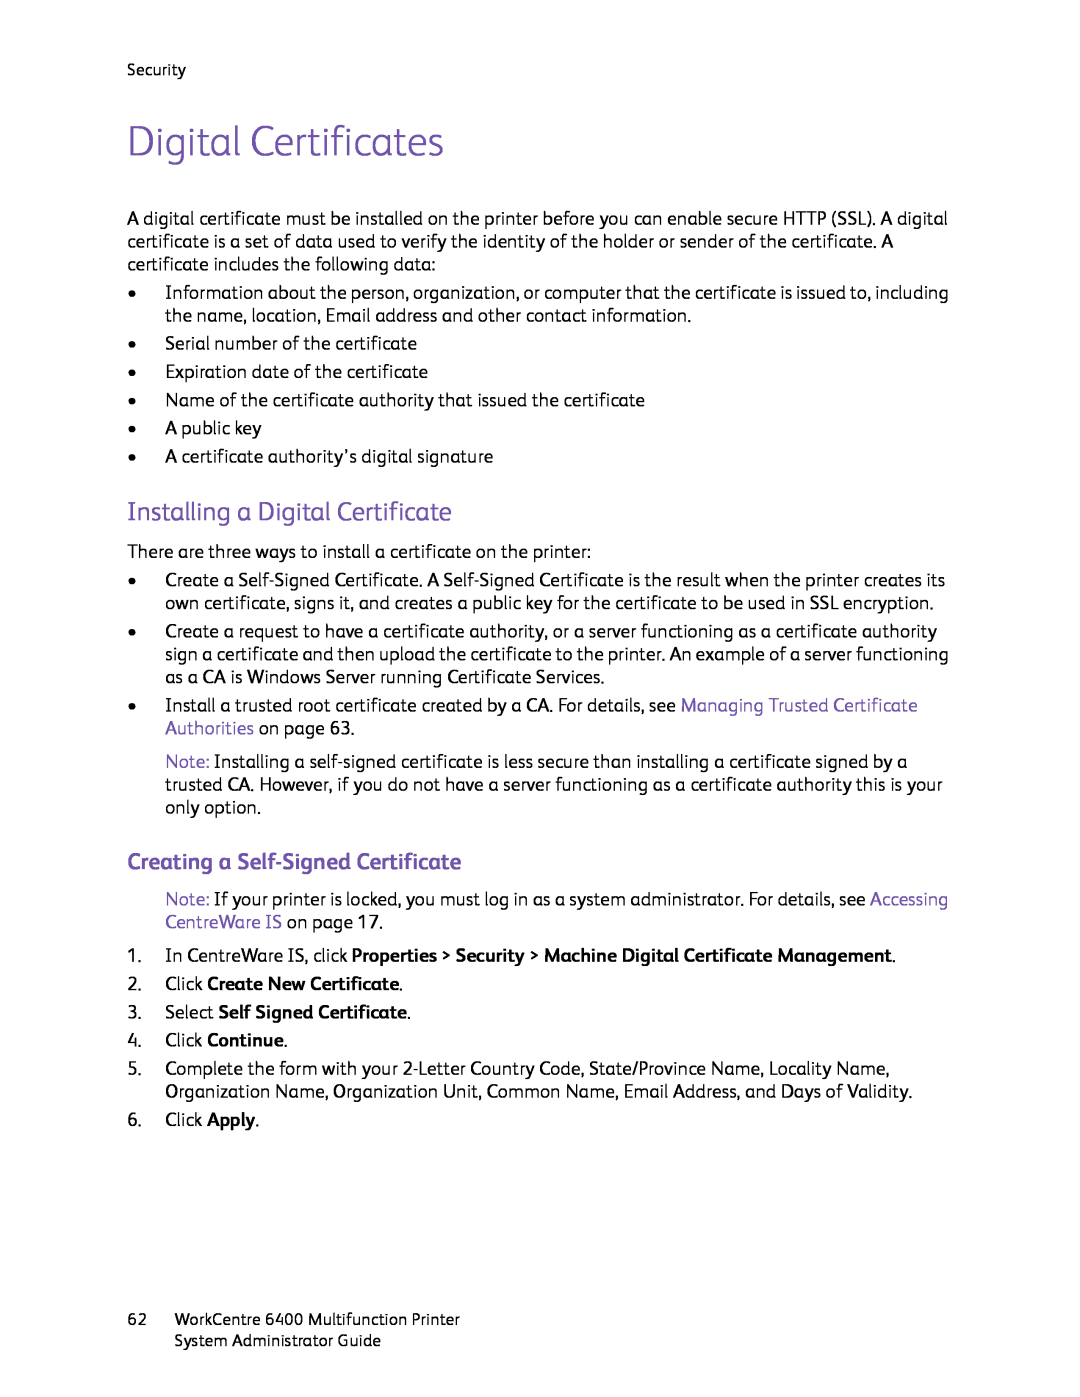 Xerox 6400 manual Digital Certificates, Installing a Digital Certificate 